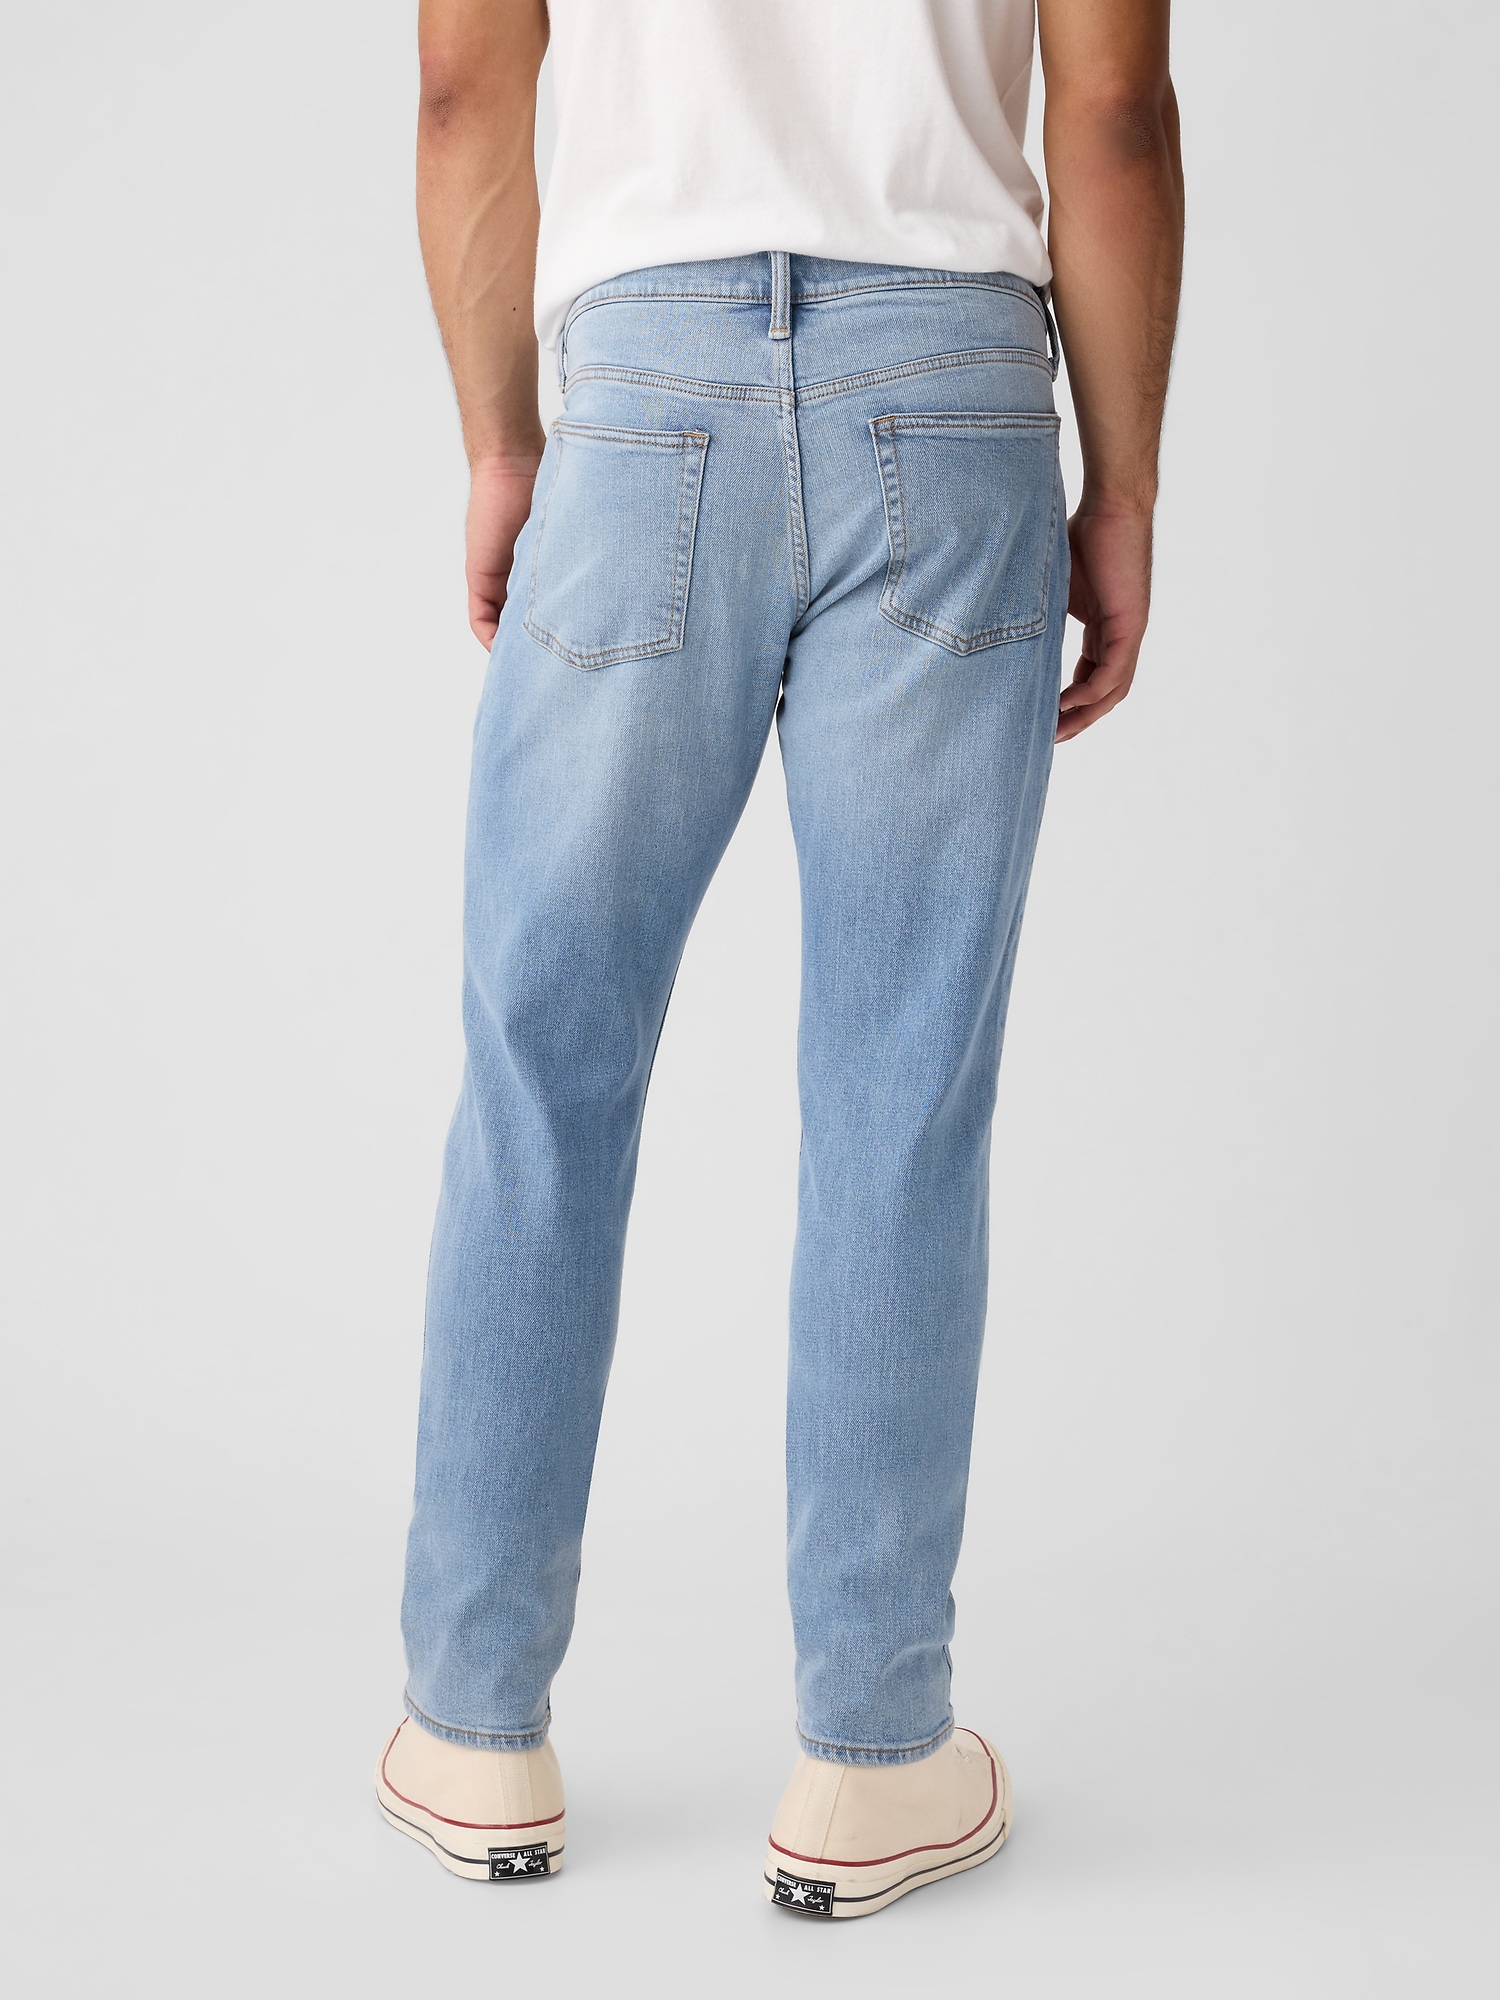 GAP Mens Gapflex Slim Jeans, Rinsed, 28W x 30L US at  Men's Clothing  store